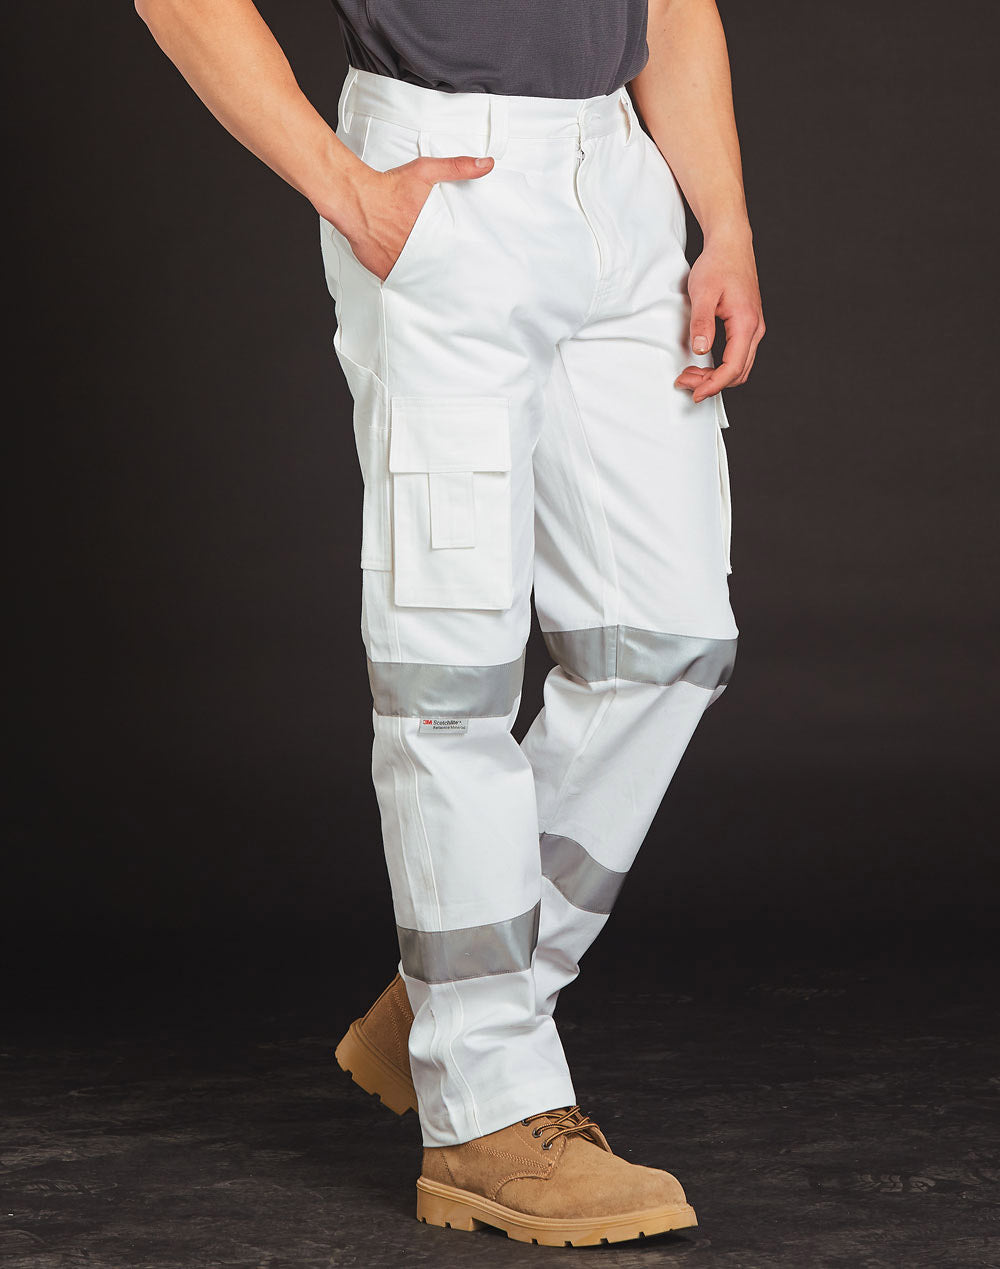 JCWP18HV Mens White Safety pants